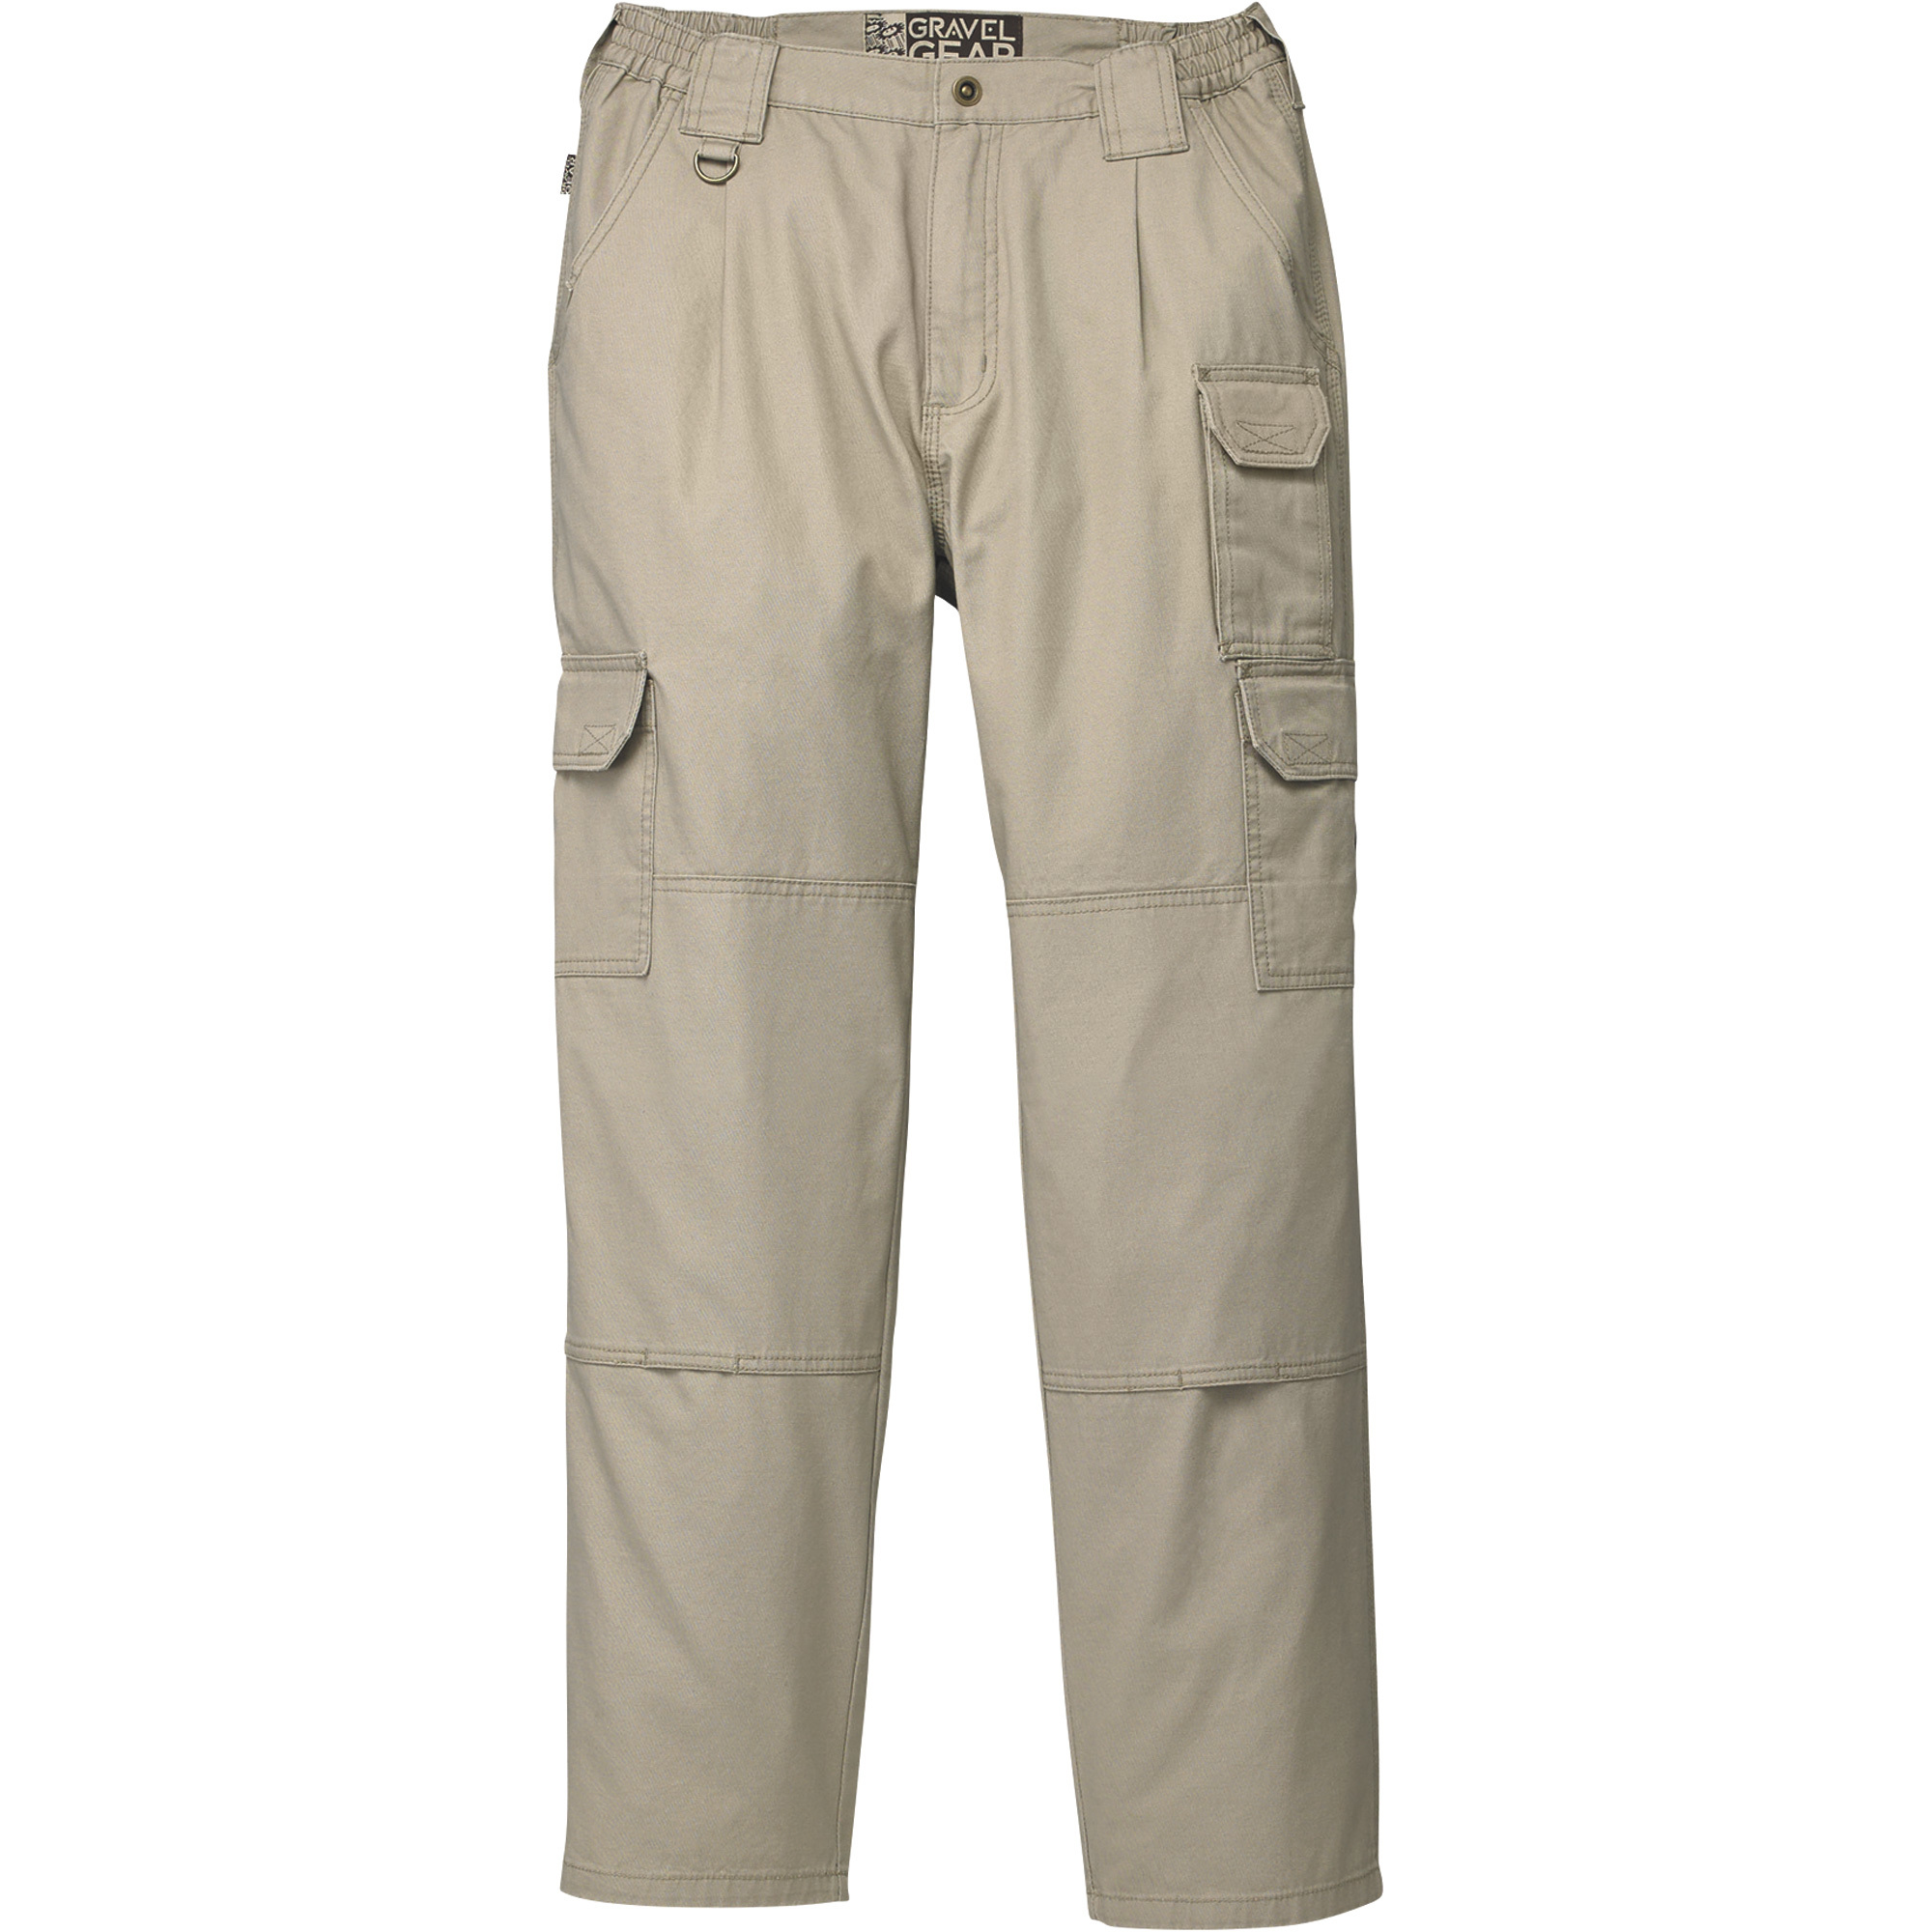 Gravel Gear Men's 7-Pocket Tactical Pants with Teflon - Khaki, 38Inch Waist x 30Inch Inseam